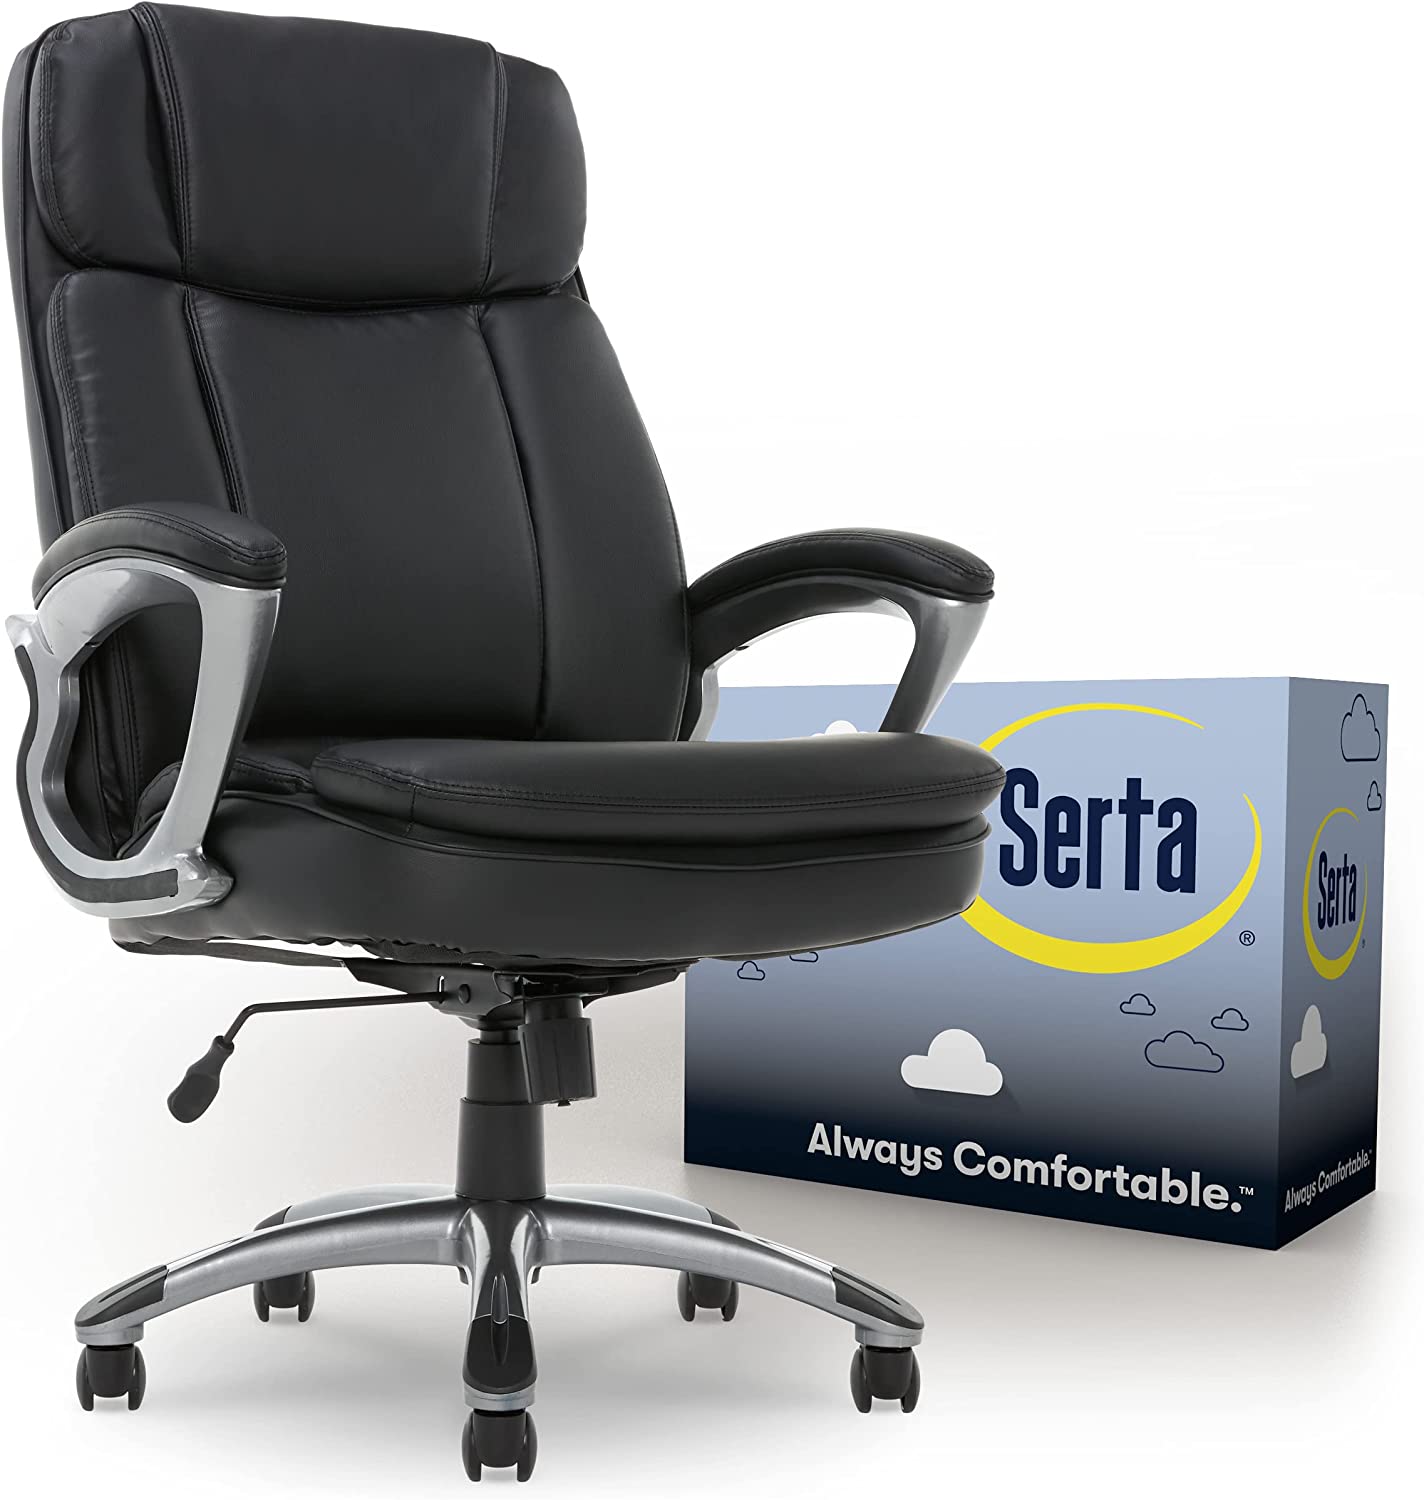 Serta Executive Office Chair Review Ergonomic Lumbar Support 